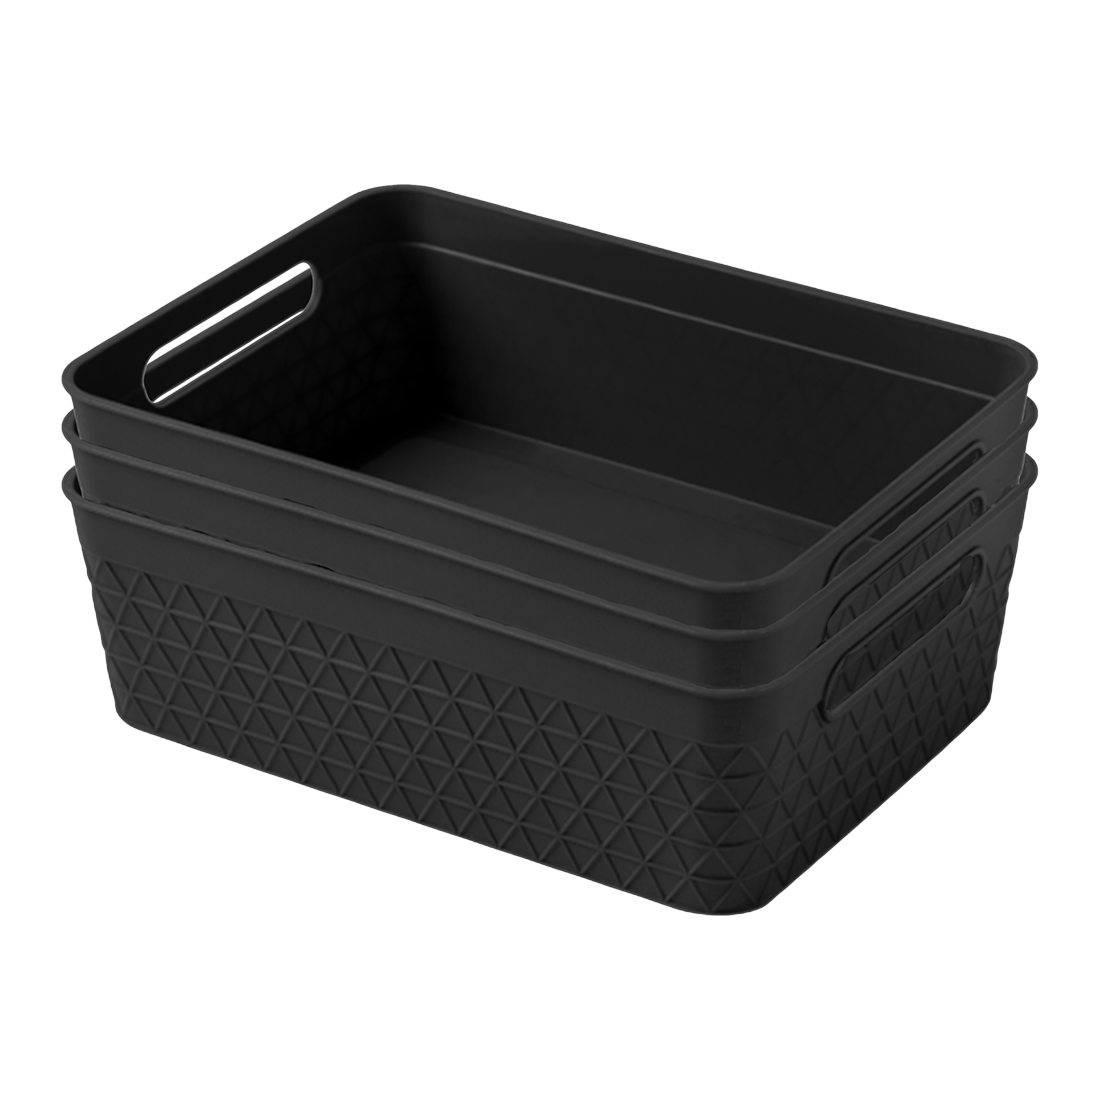 3 Pack Woven Plastic Storage Basket - Black Diamonds